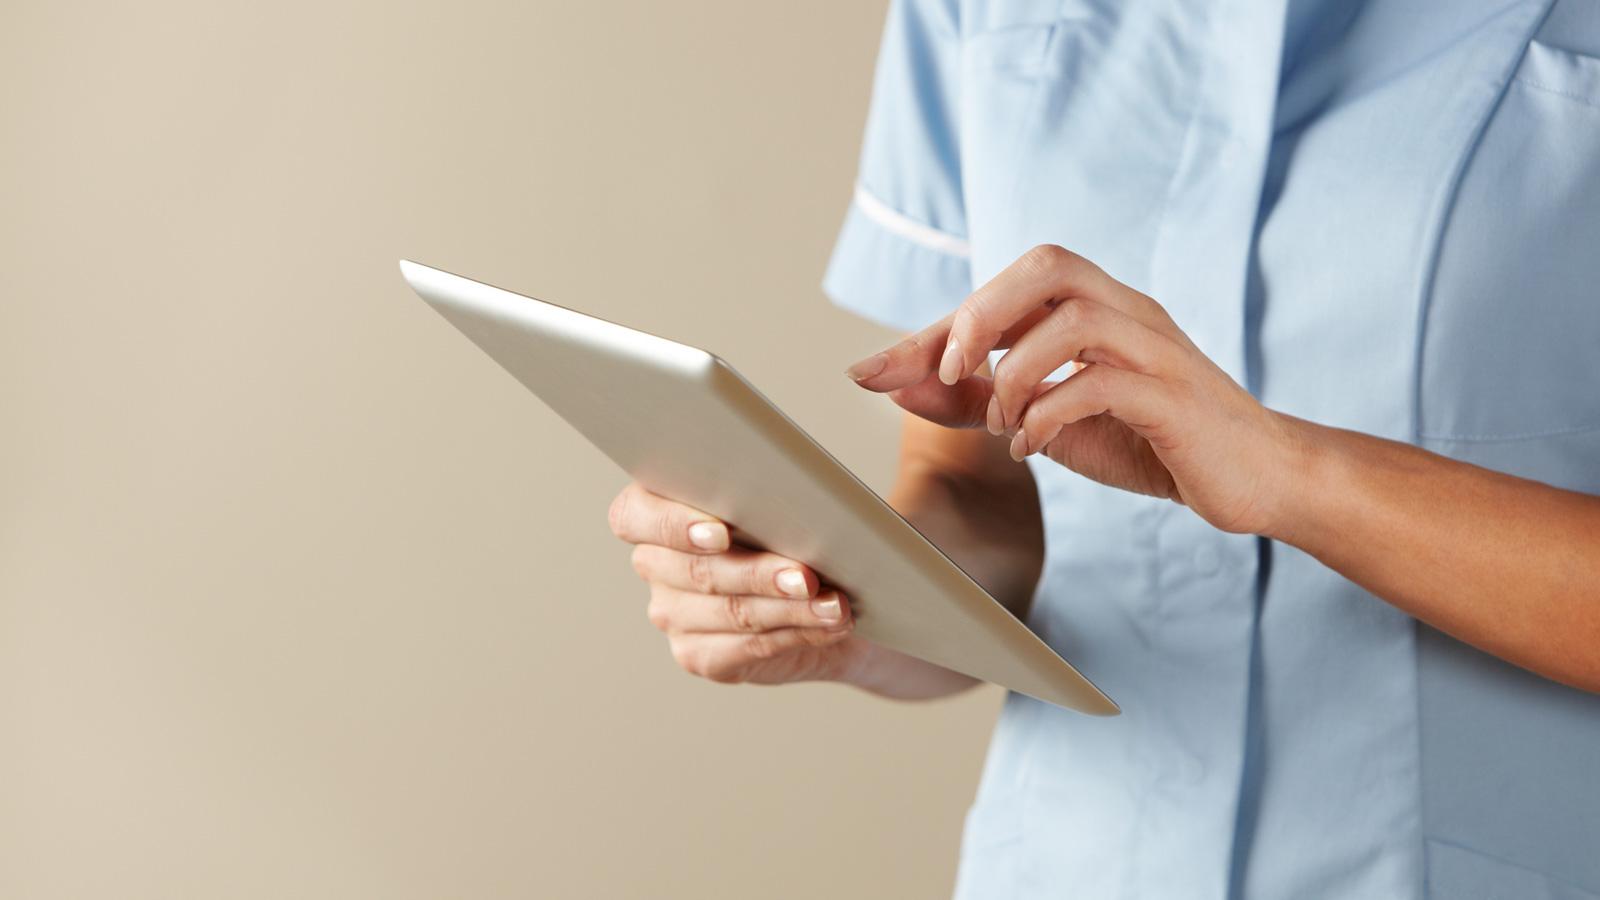 nurse using tablet